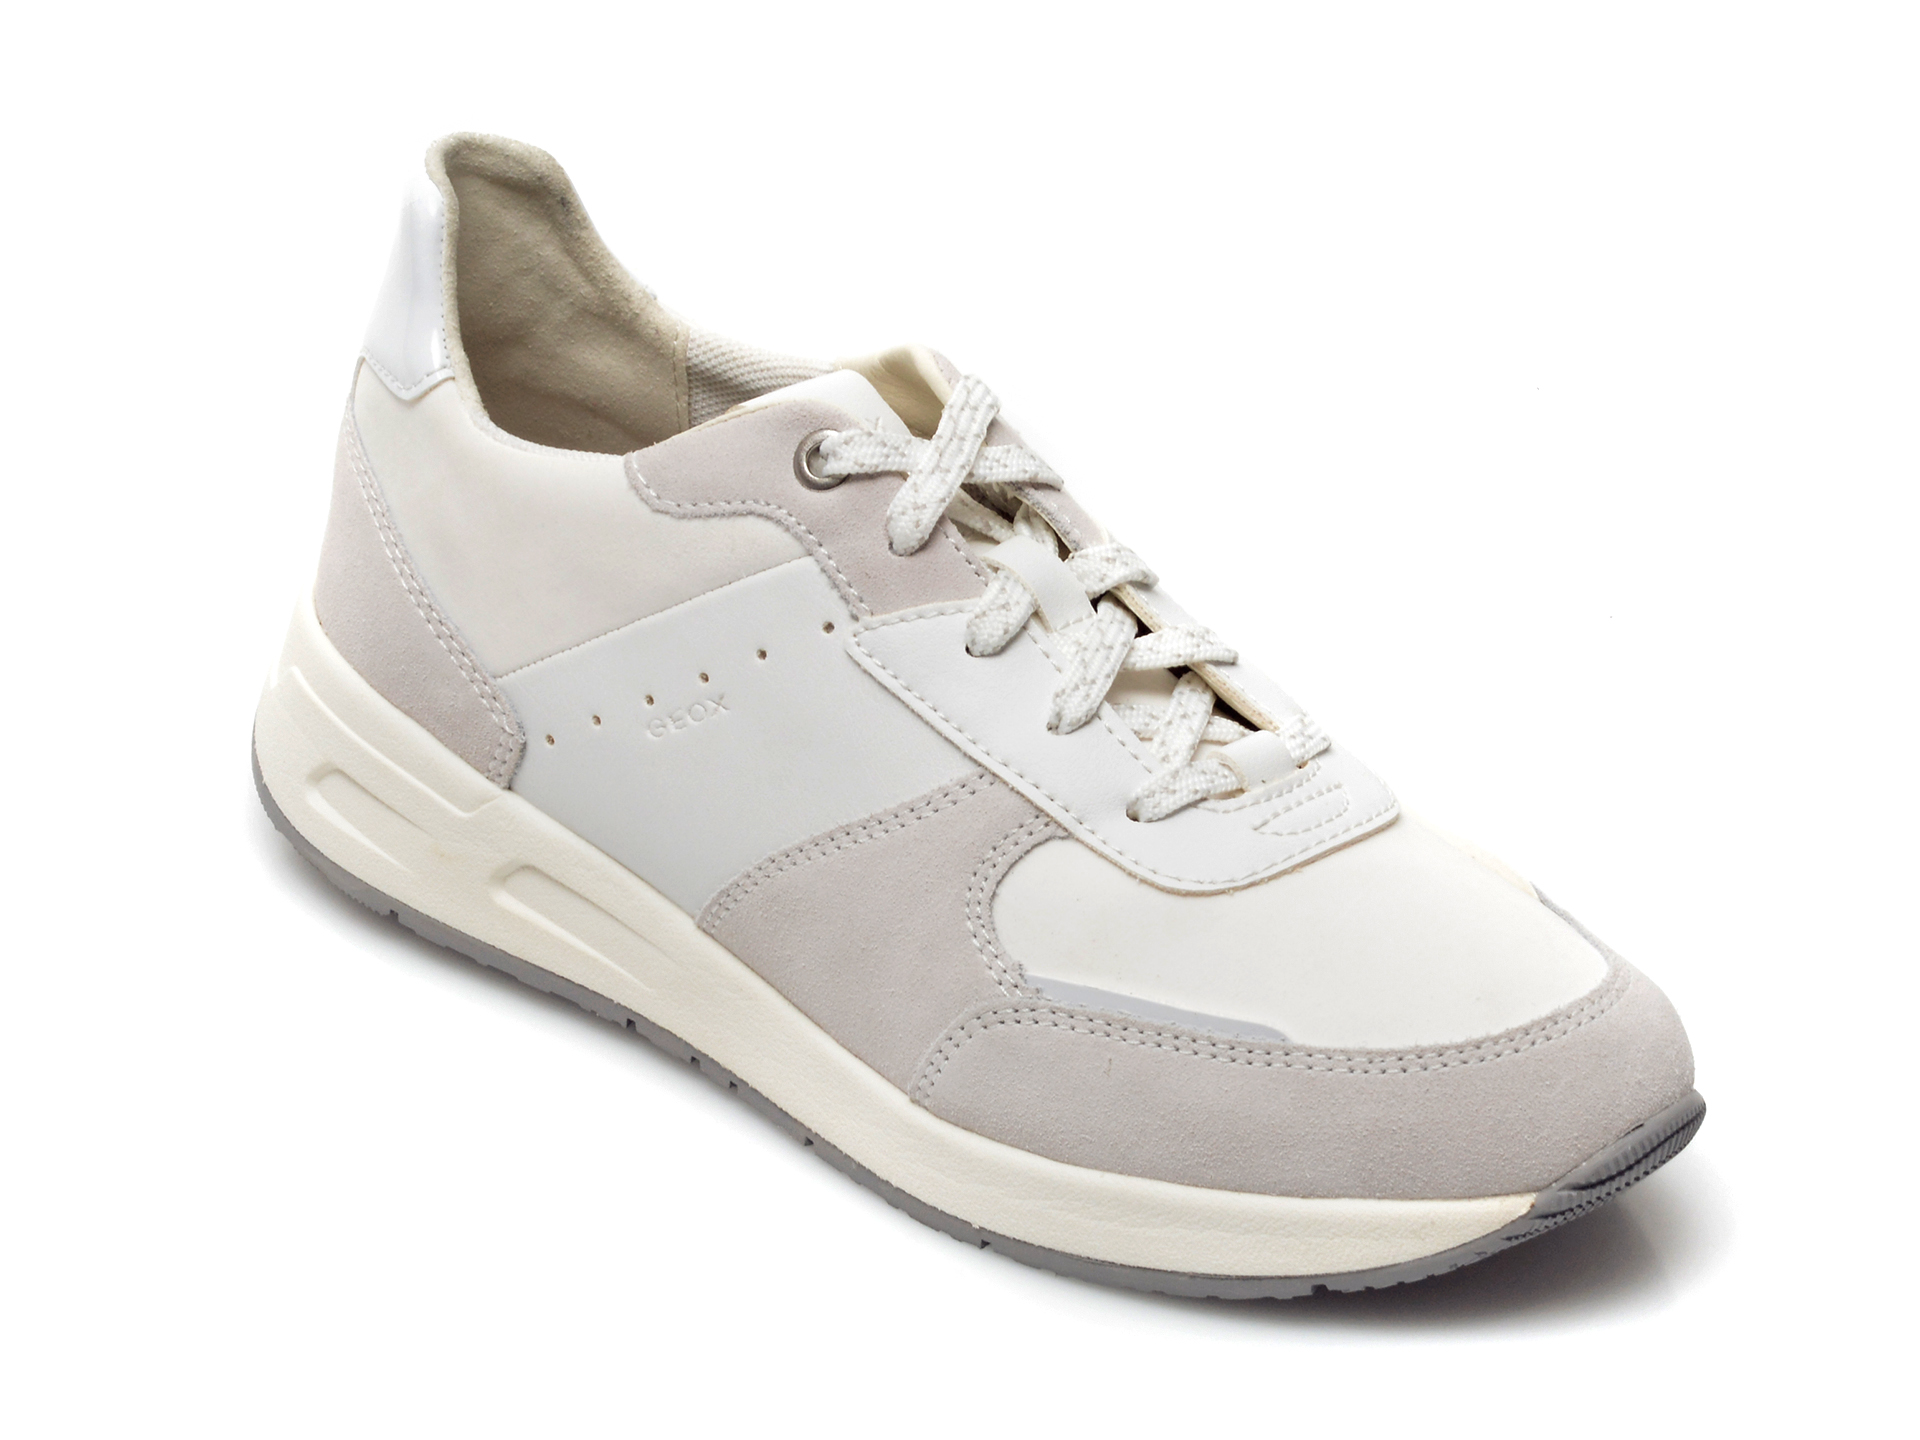 Pantofi sport GEOX albi, D25NQA, din material textil si piele naturala Geox